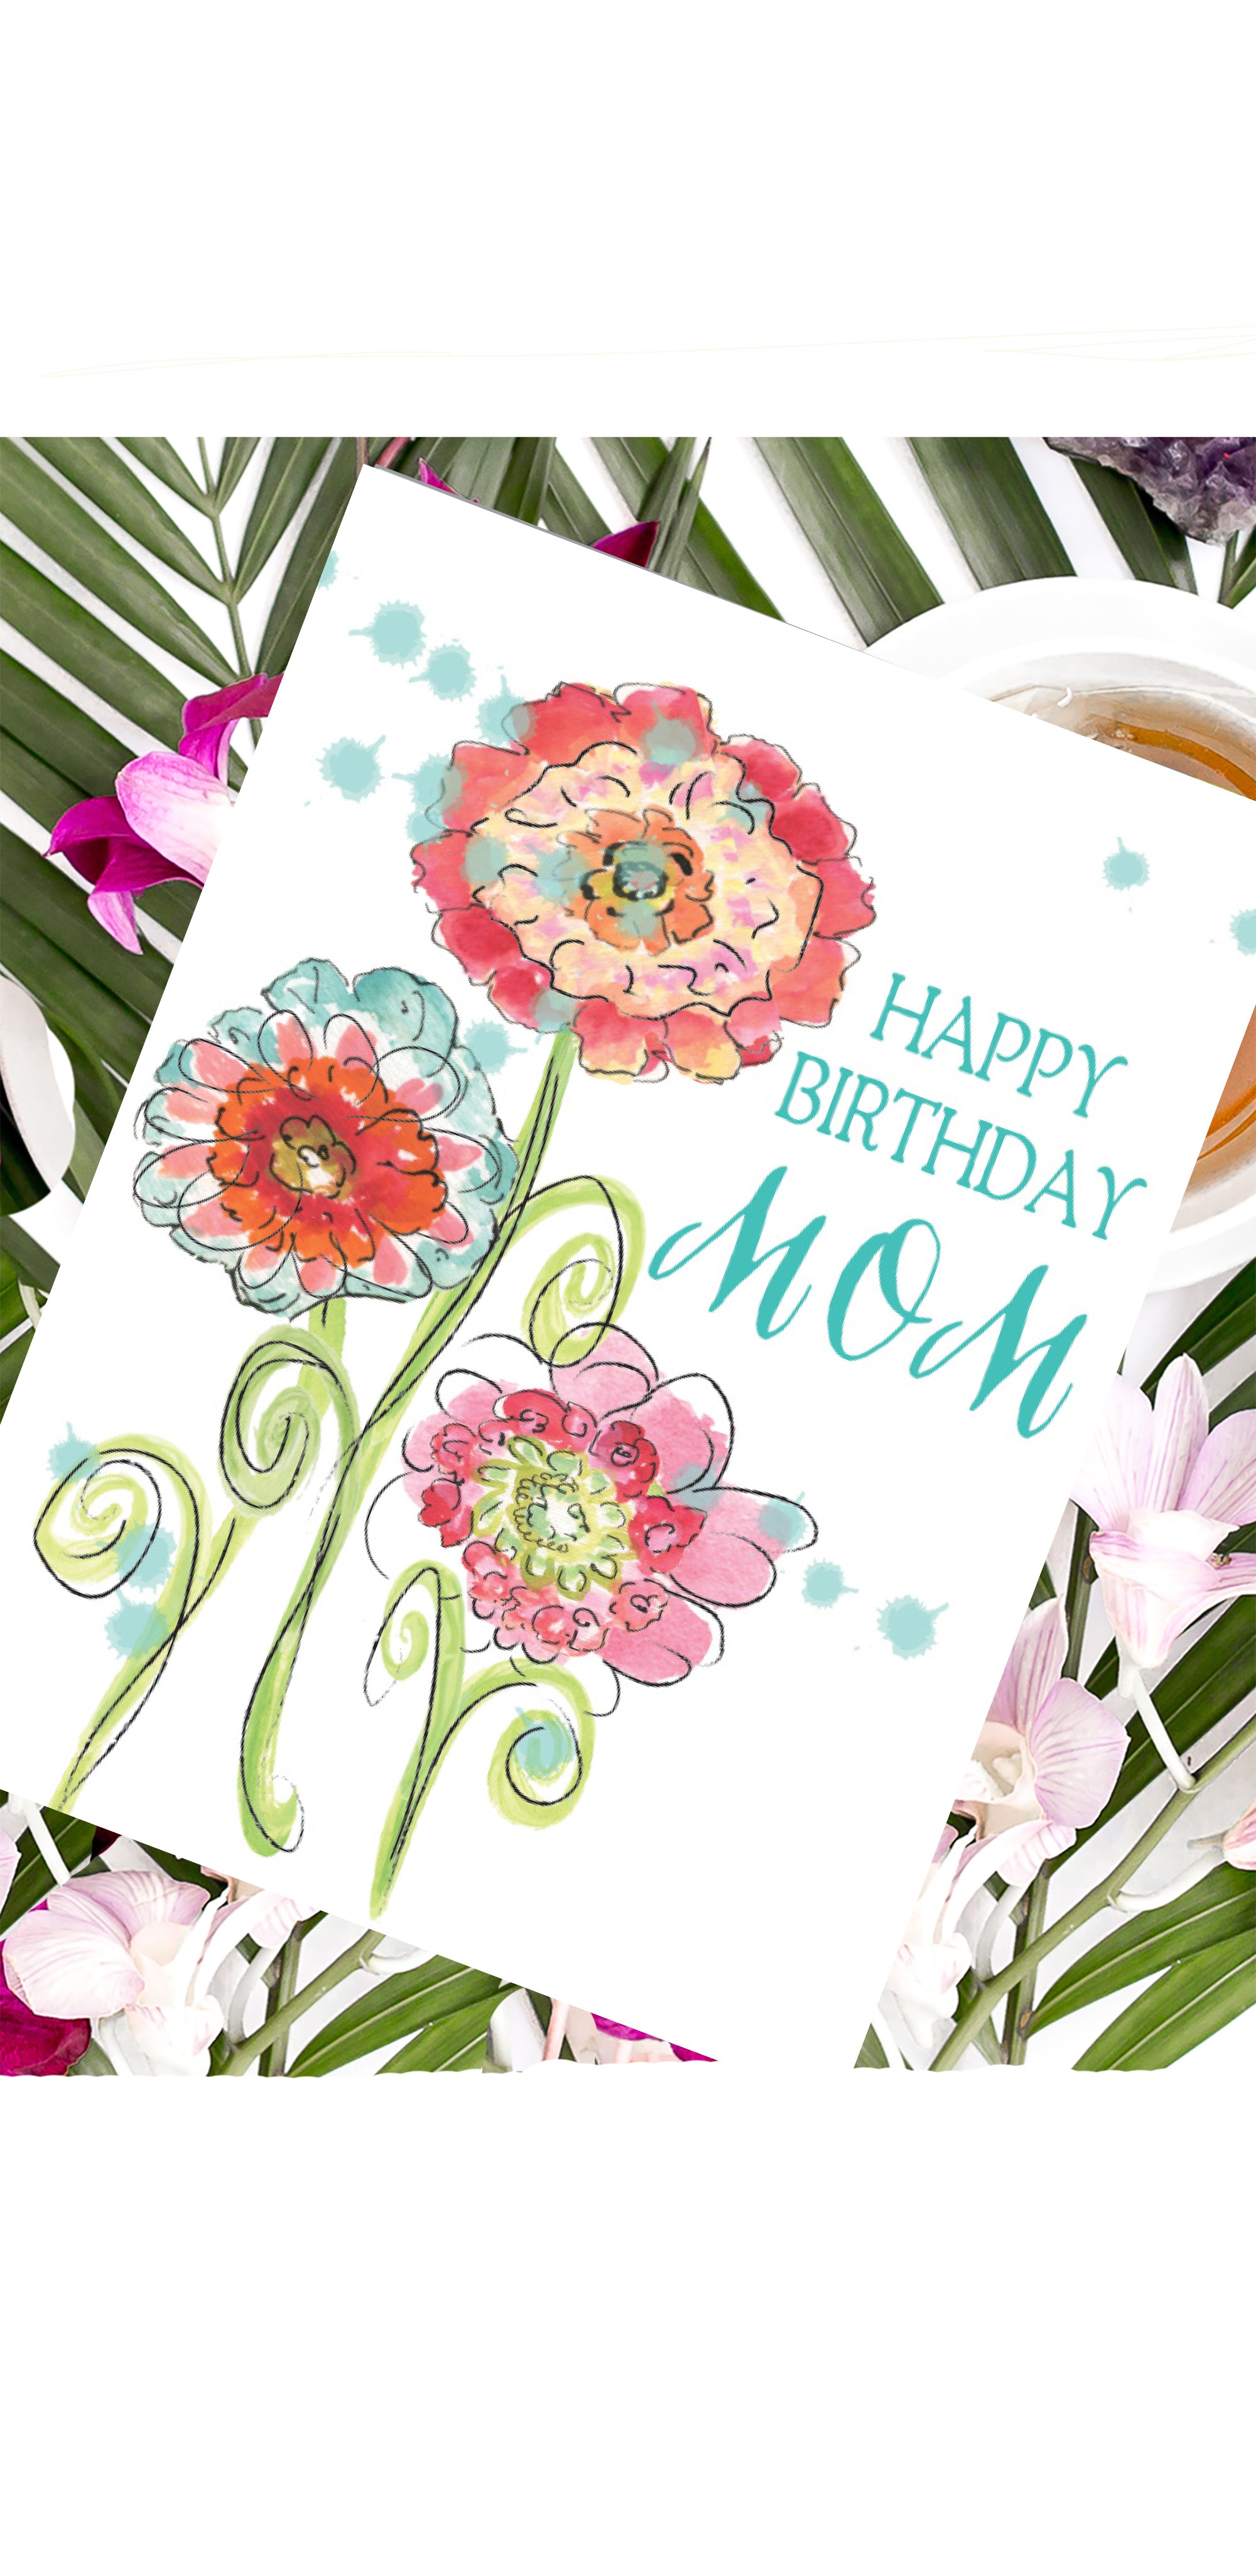 Happy Birthday Mom Greeting Card